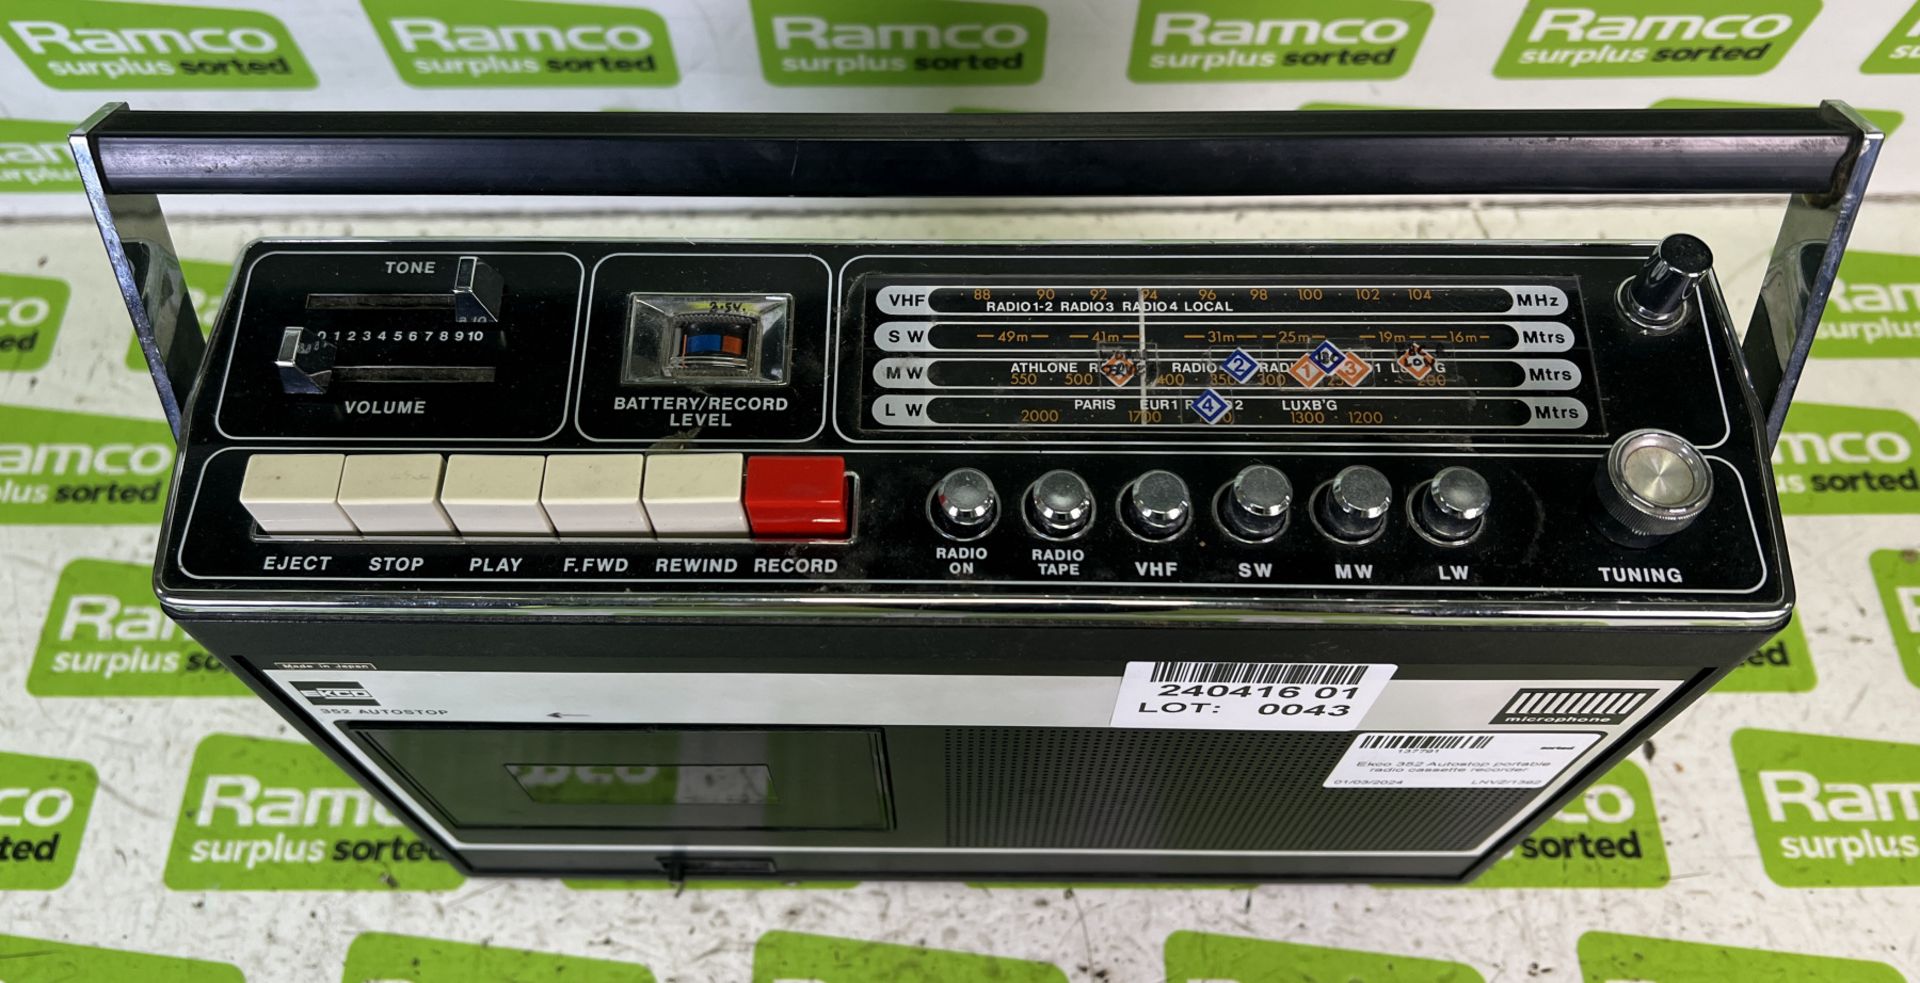 Ekco 352 Autostop portable radio cassette recorder - Image 2 of 4